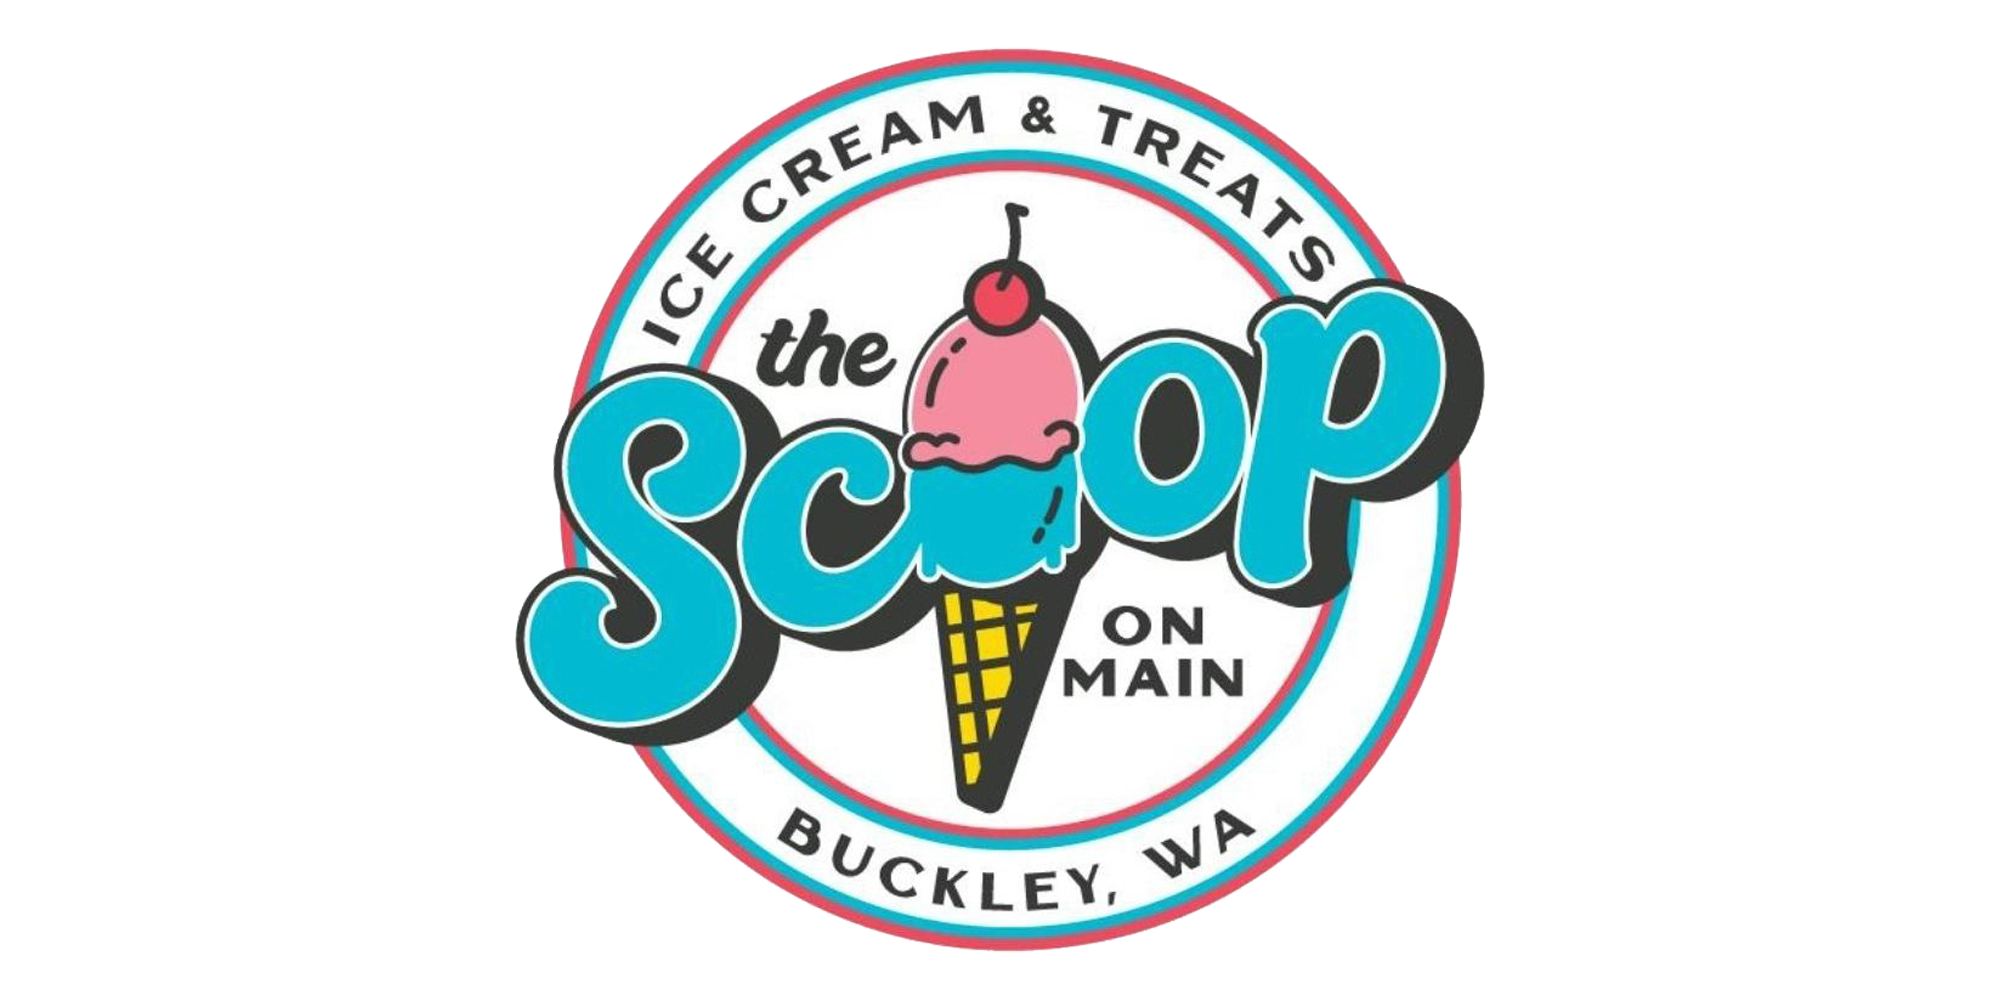 The Scoop on Main Logo